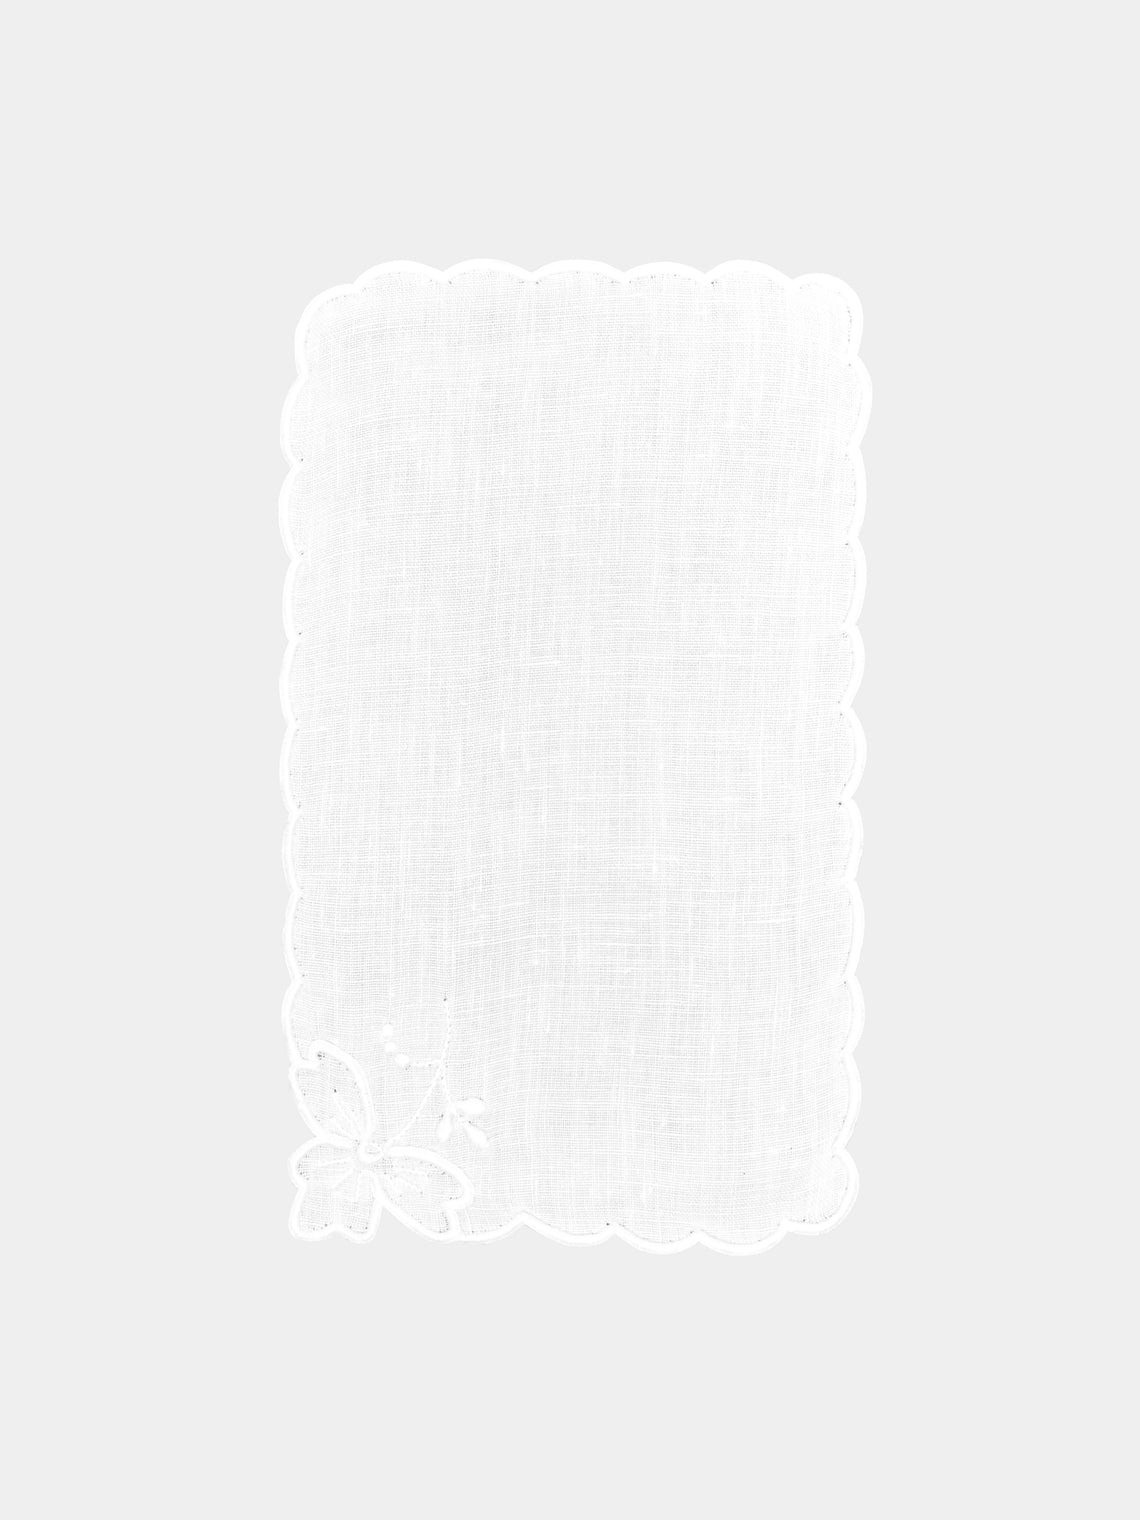 Taf Firenze - Smerlo Foglie Hand-Embroidered Linen Cocktail Napkins (Set of 6) - White - ABASK - 